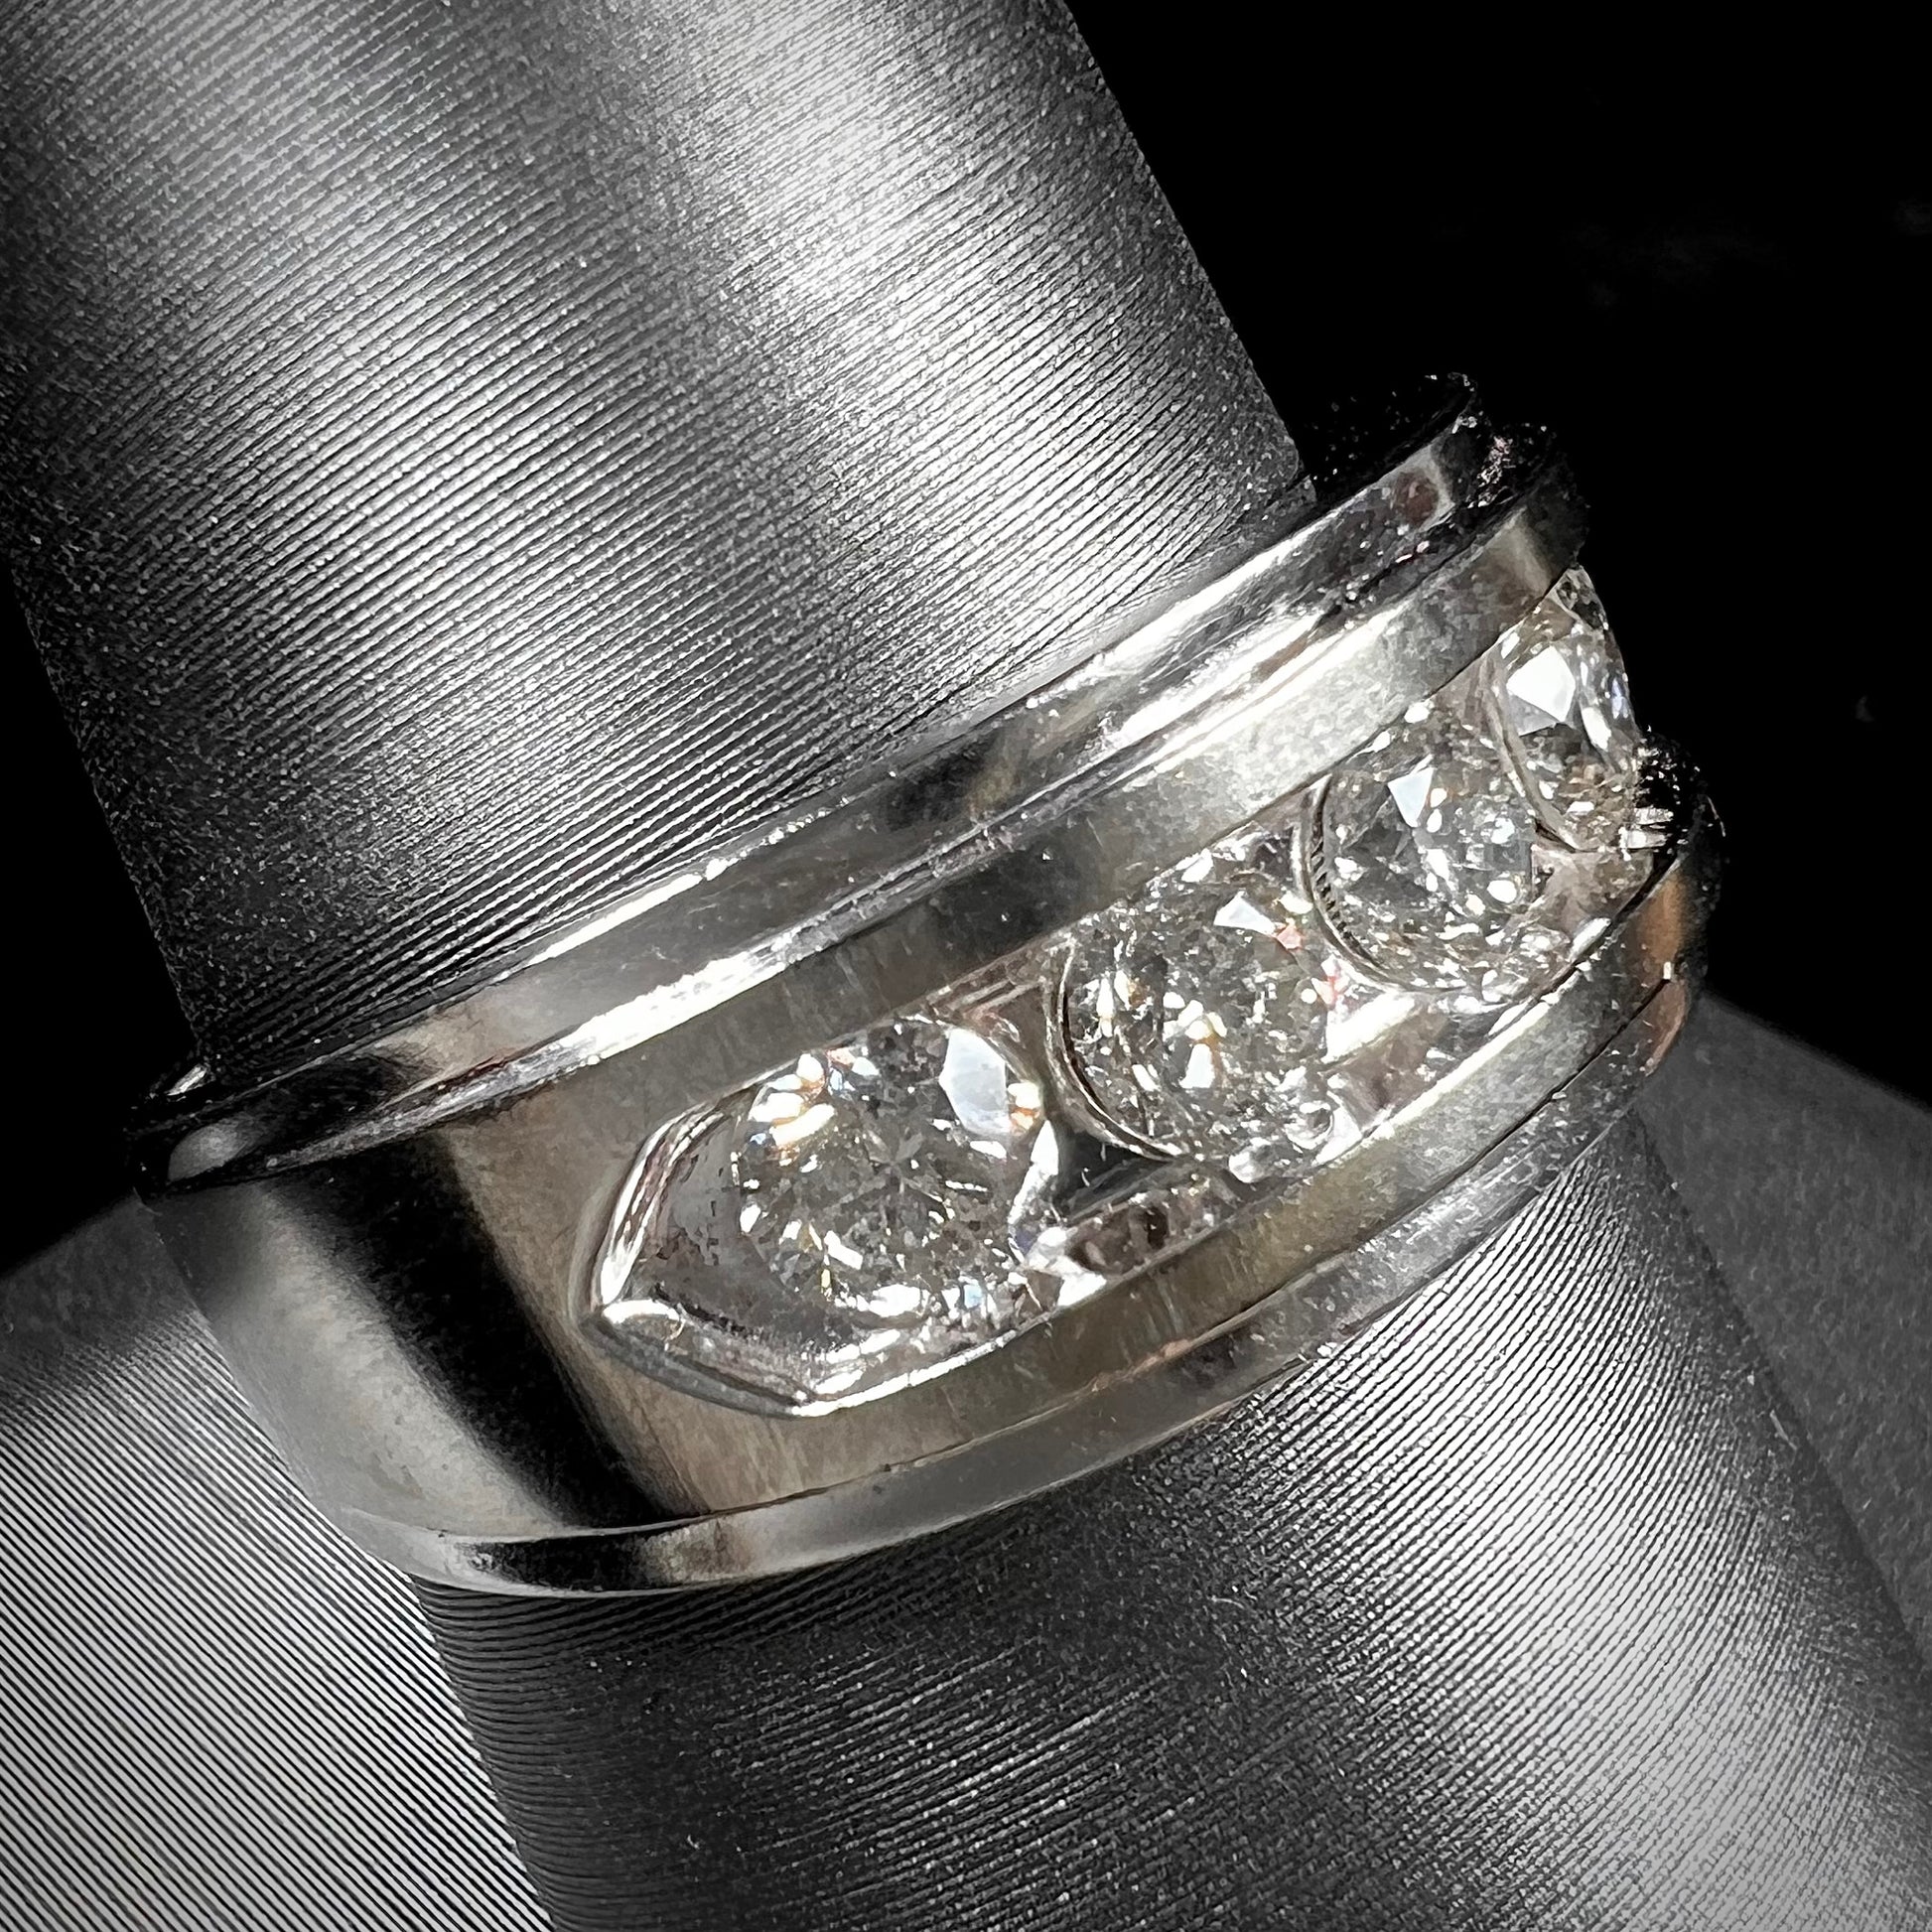 A men's estate white gold five stone diamond ring.